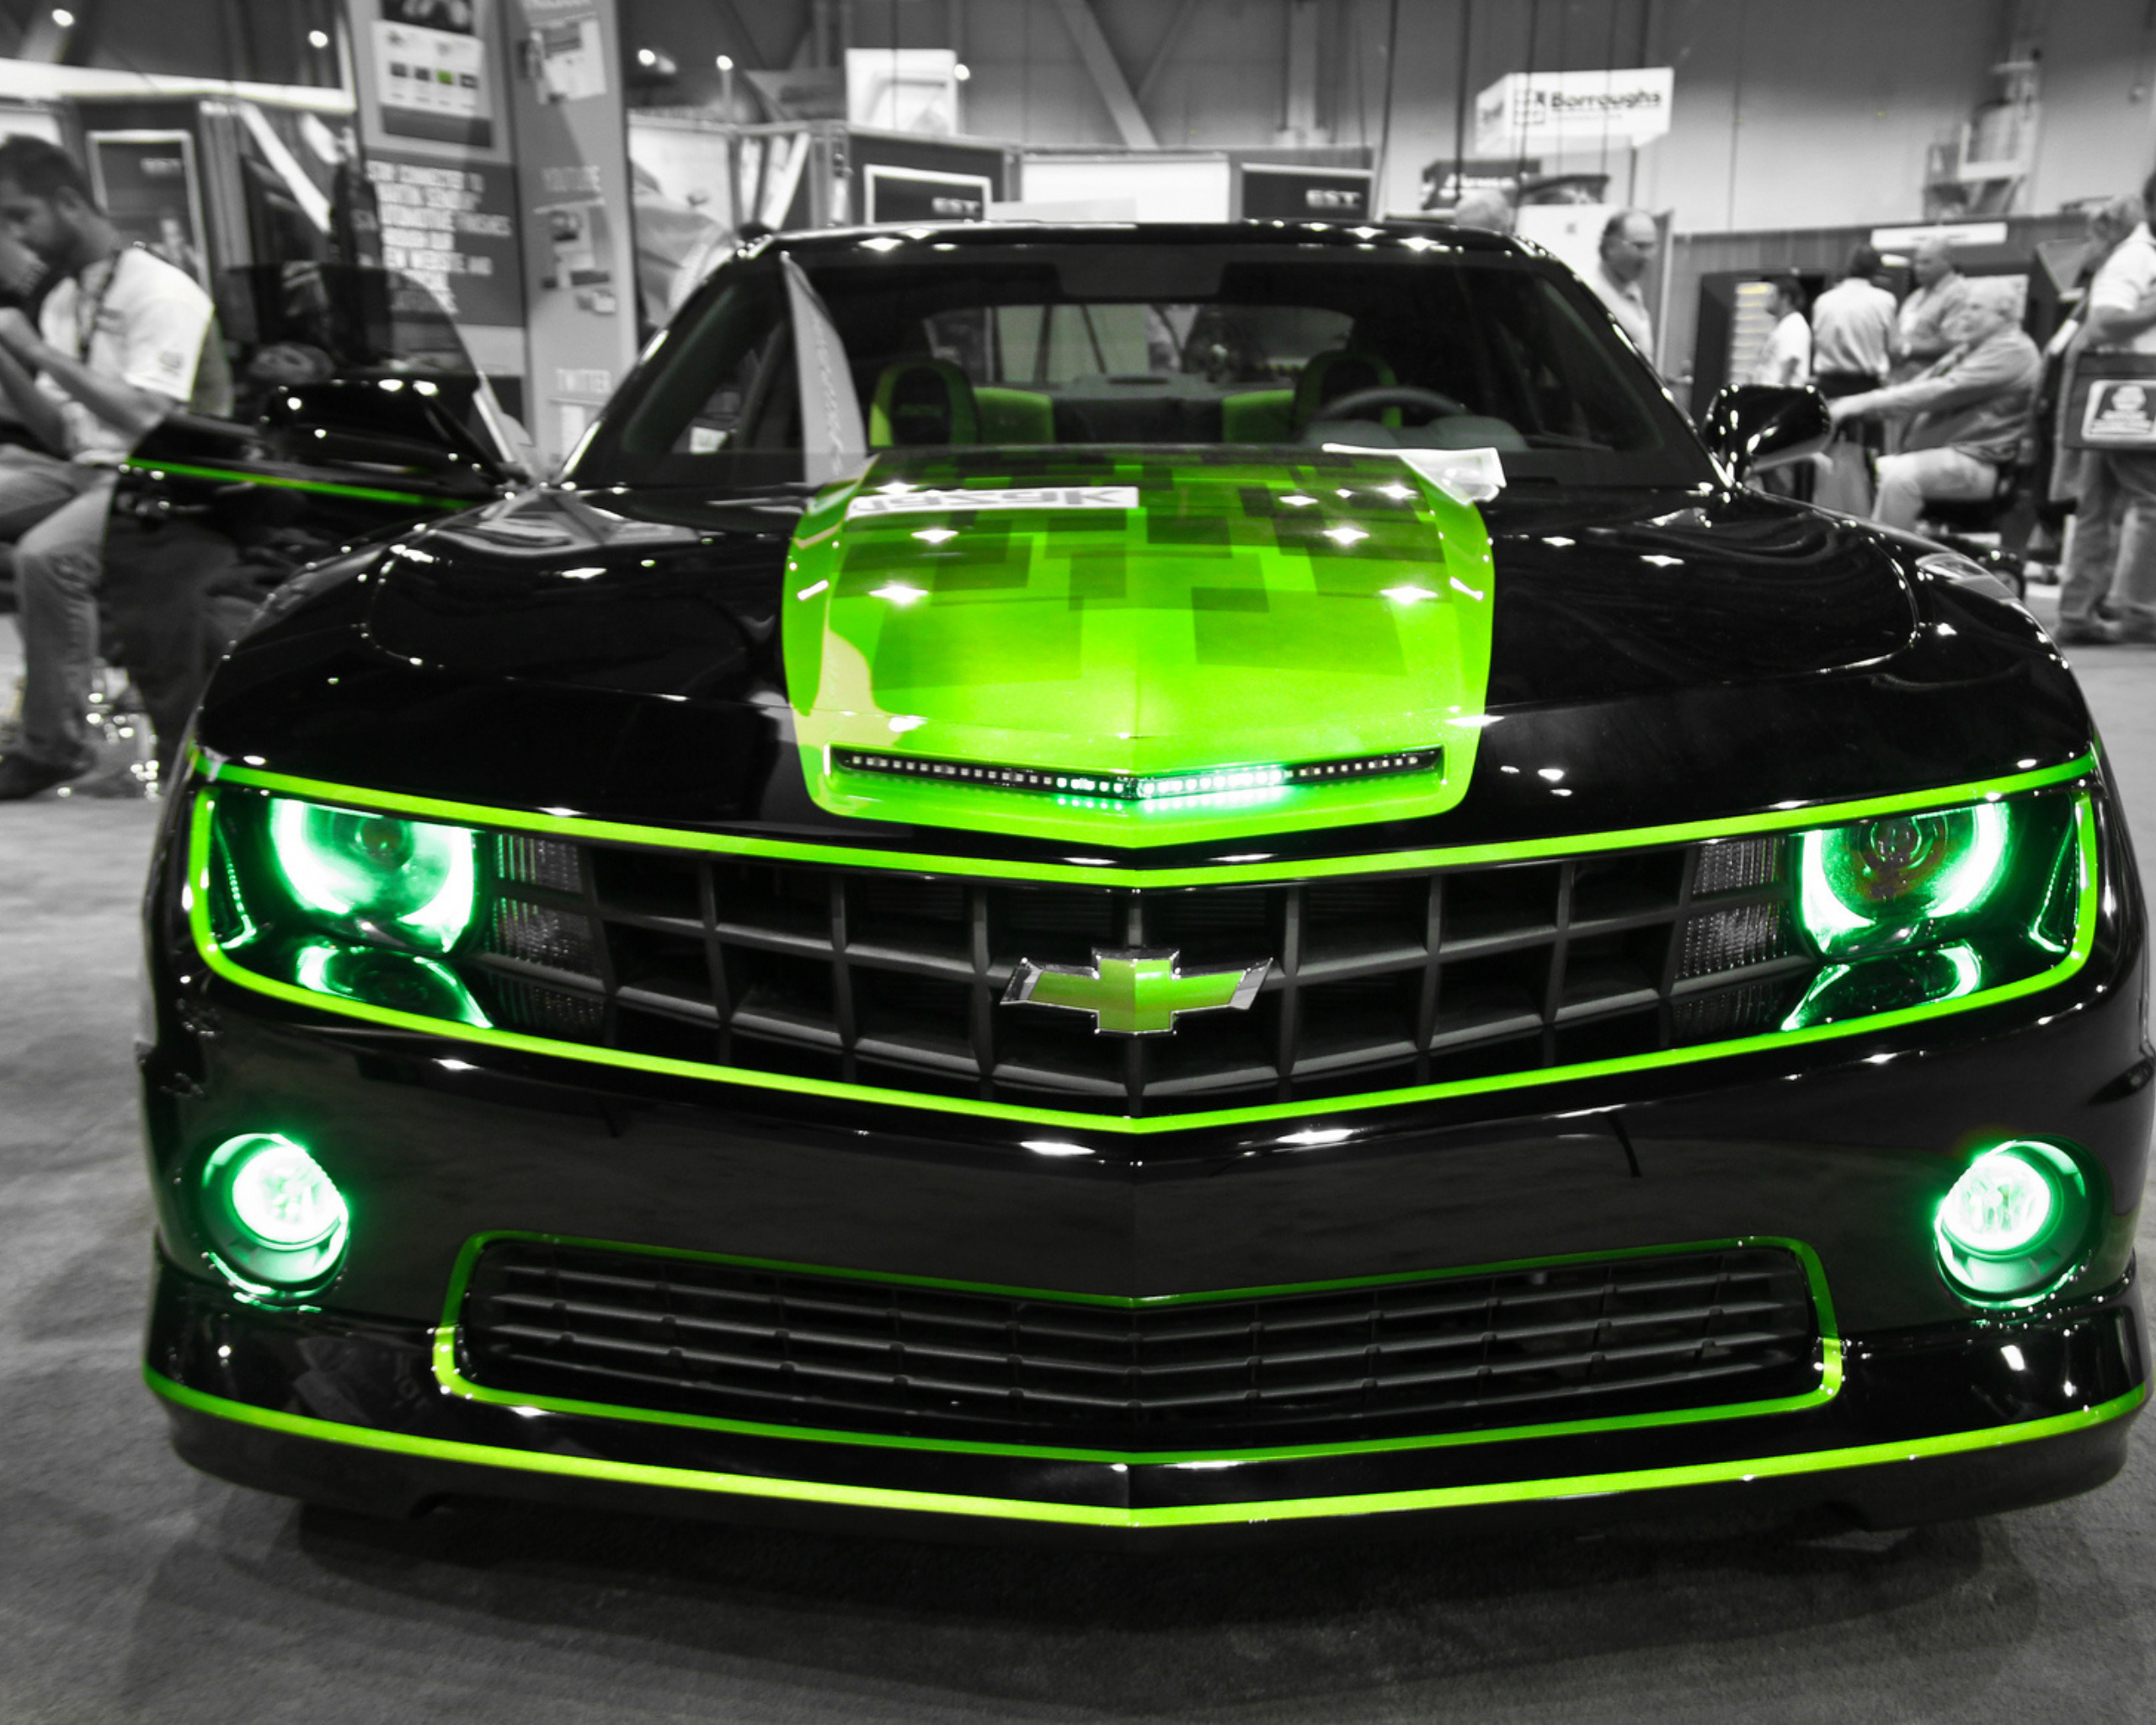 Машина с зеленой подсветкой